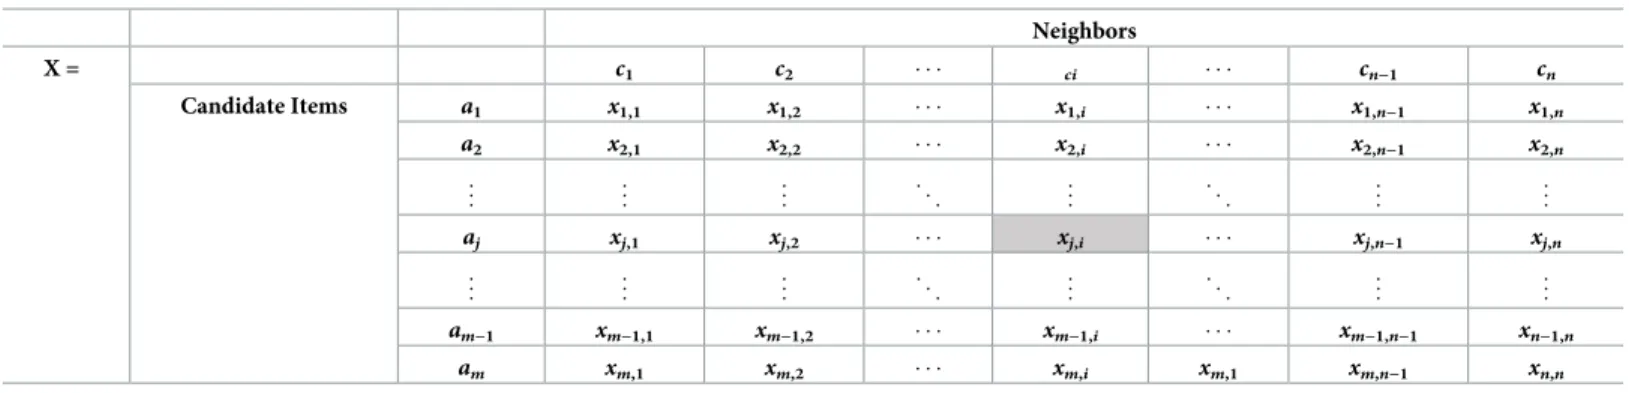 Table 2. Conceptual decision matrix X.